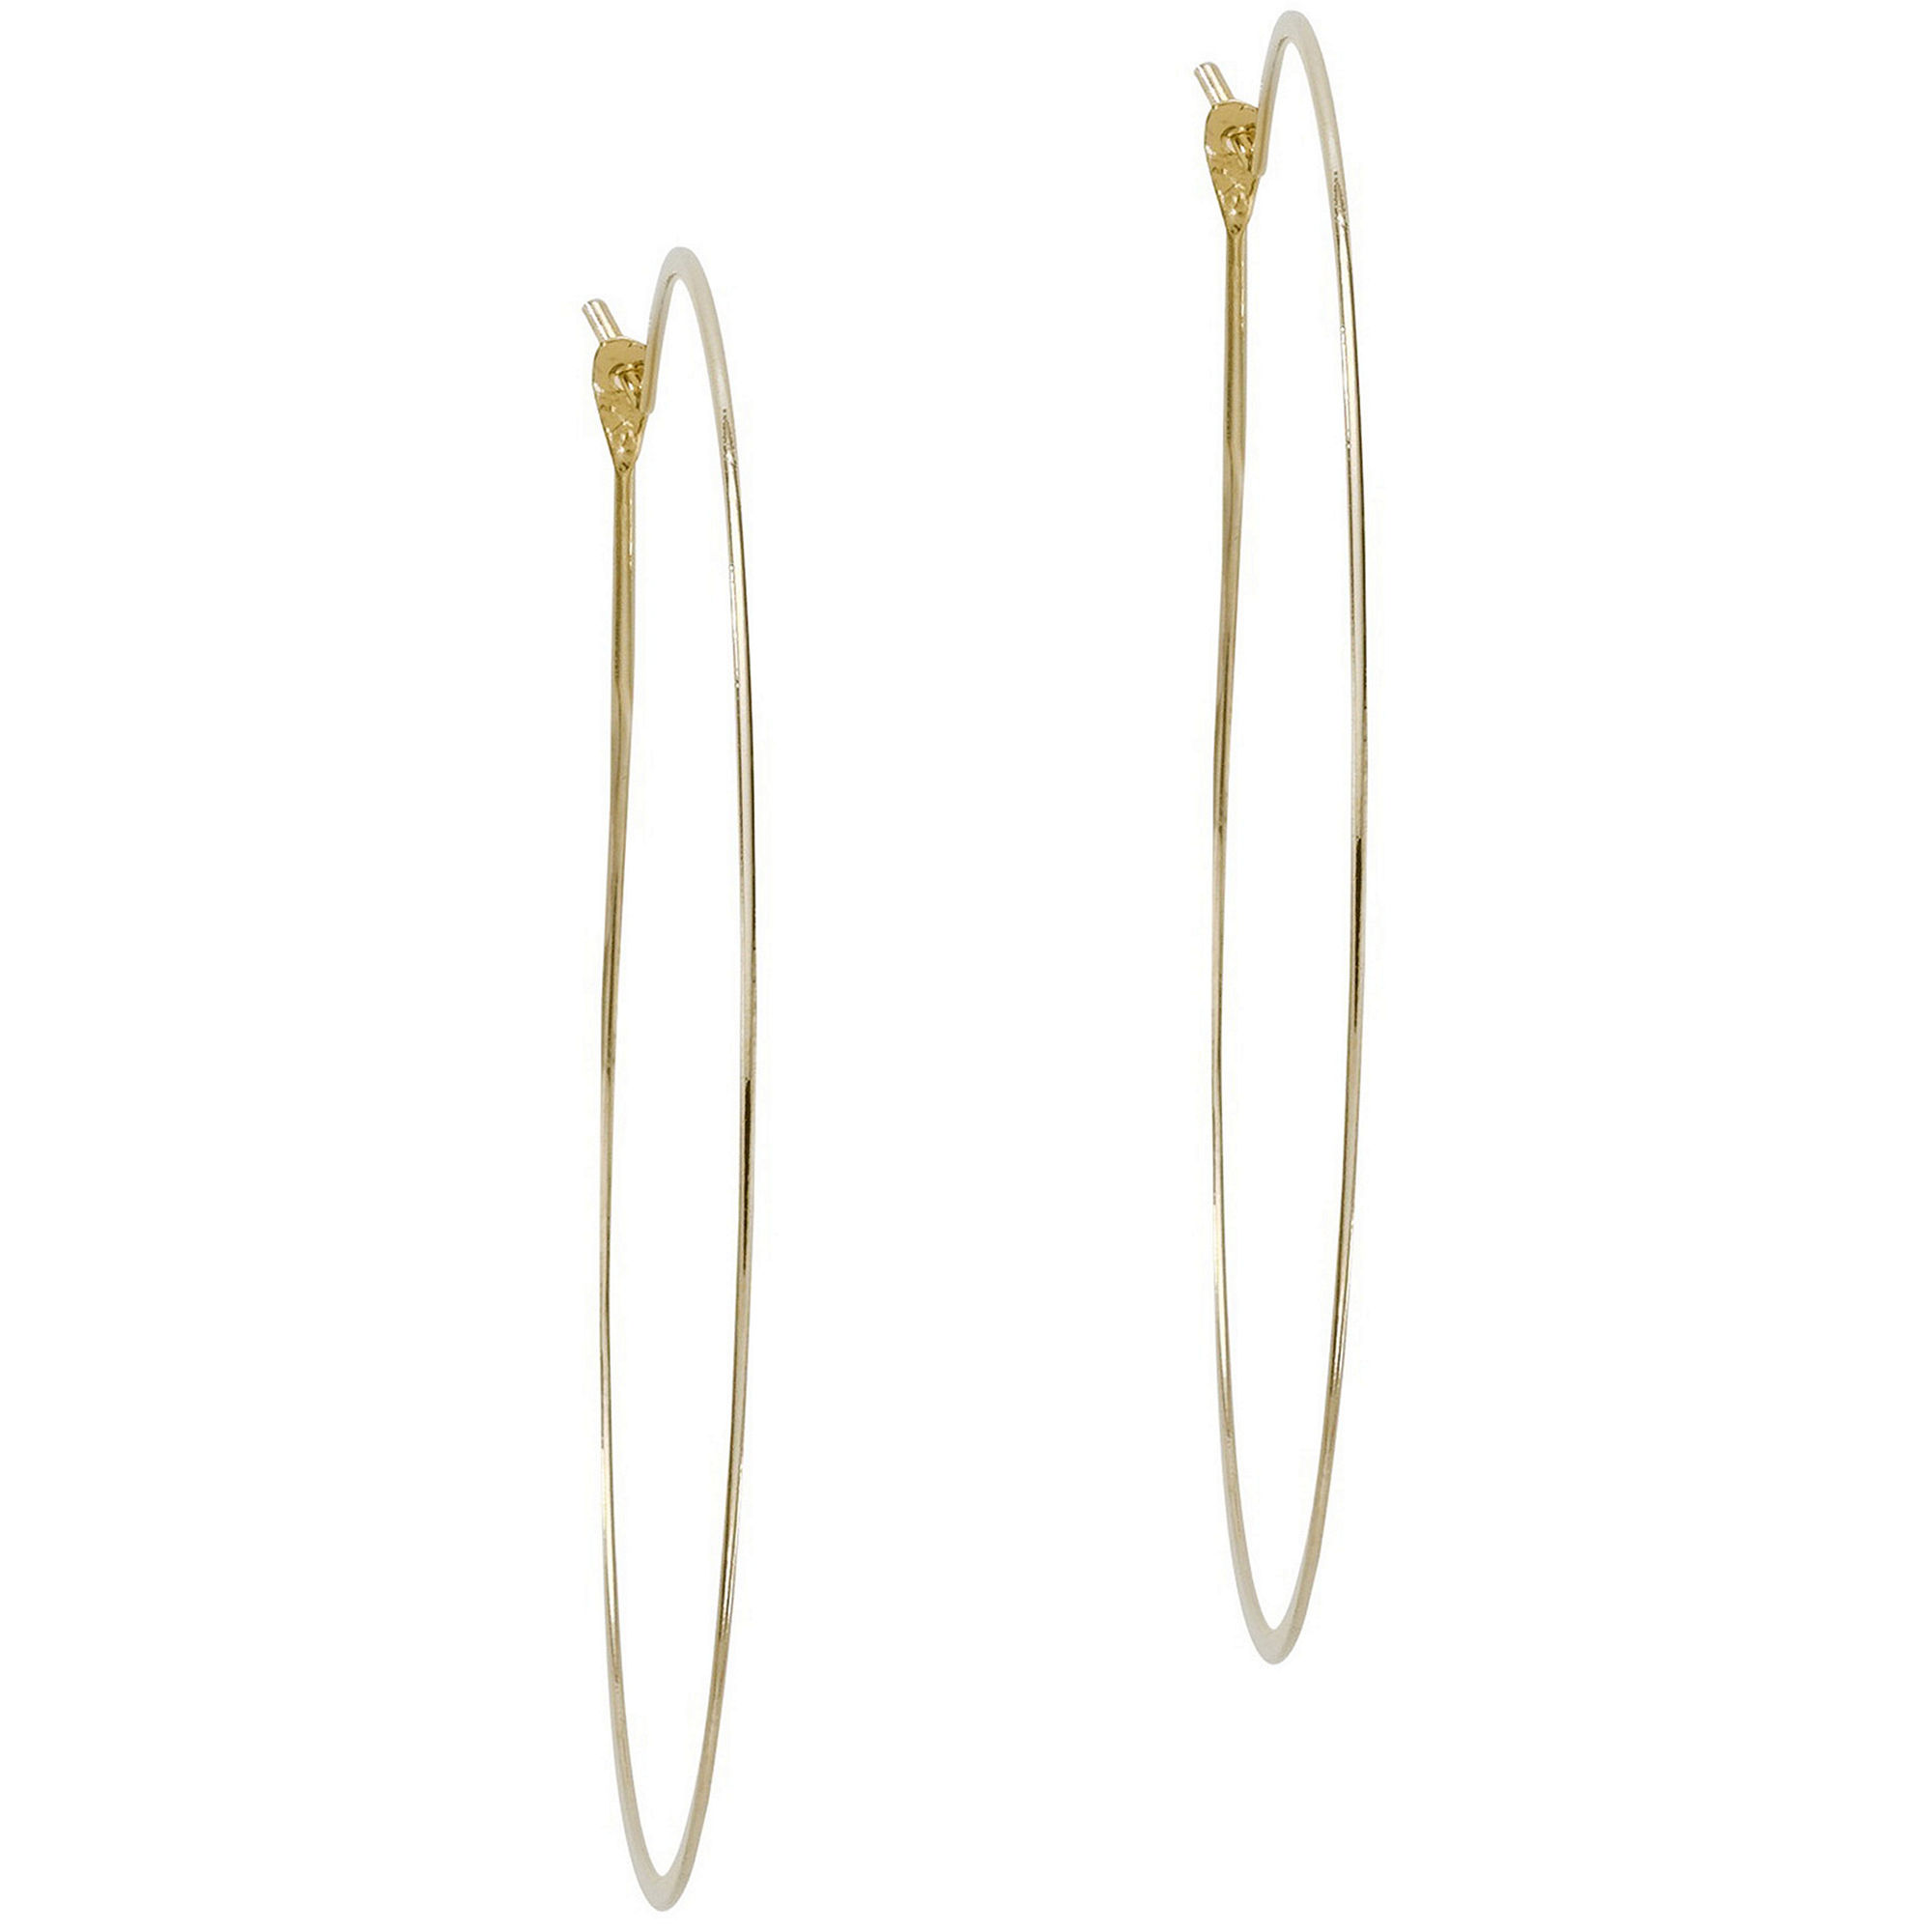 Michael Kors Thin Gold-Tone Hoop Earrings in Metallic - Lyst